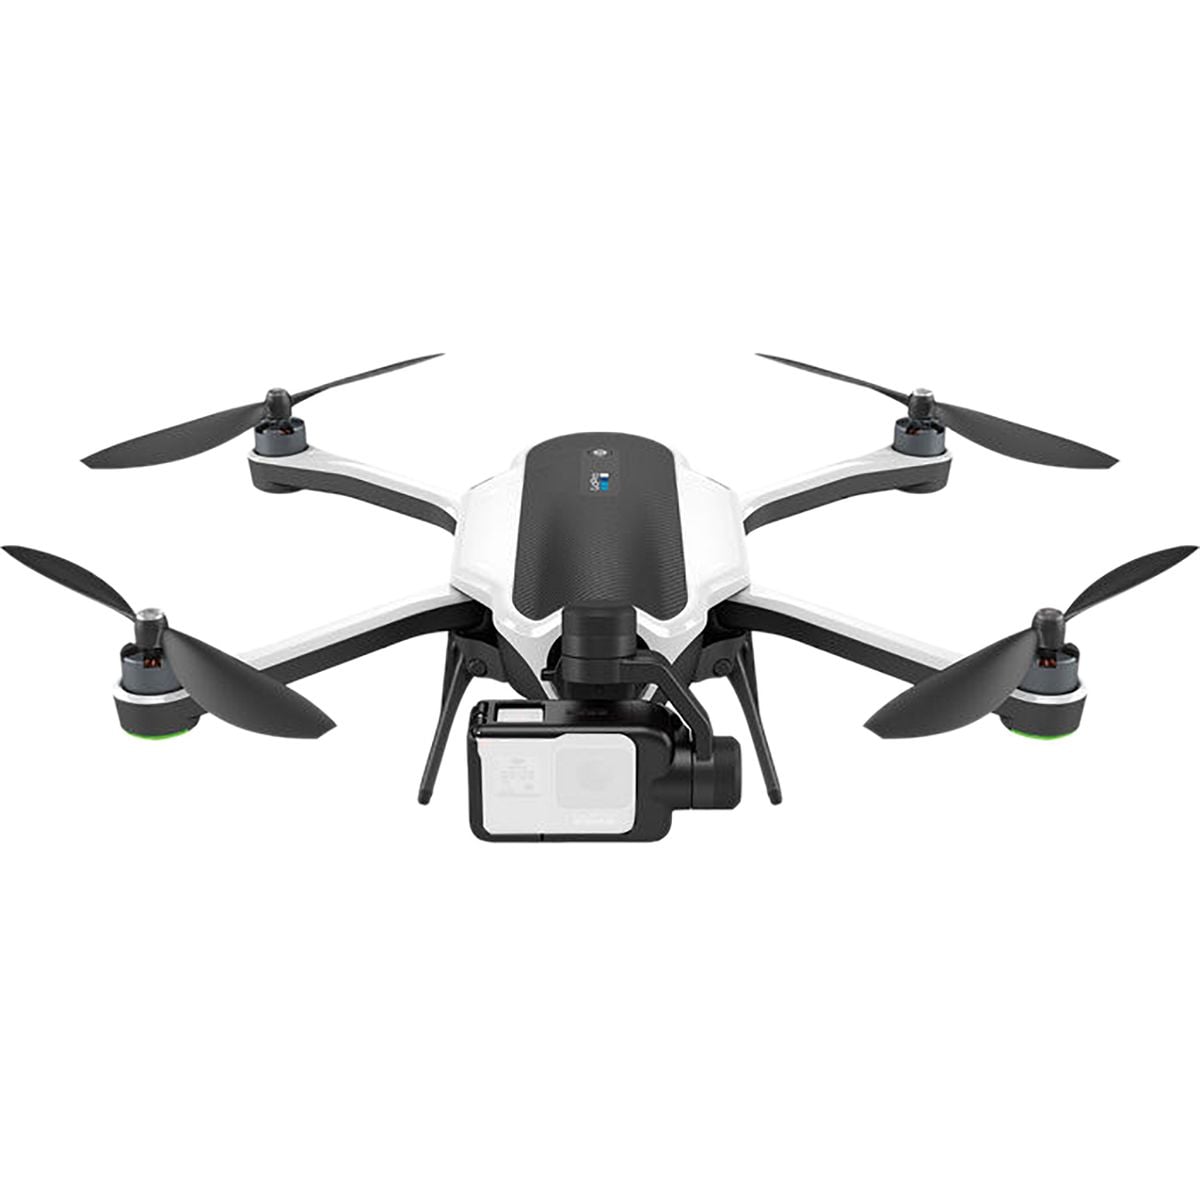 GoPro Karma Drone with HERO5 Black